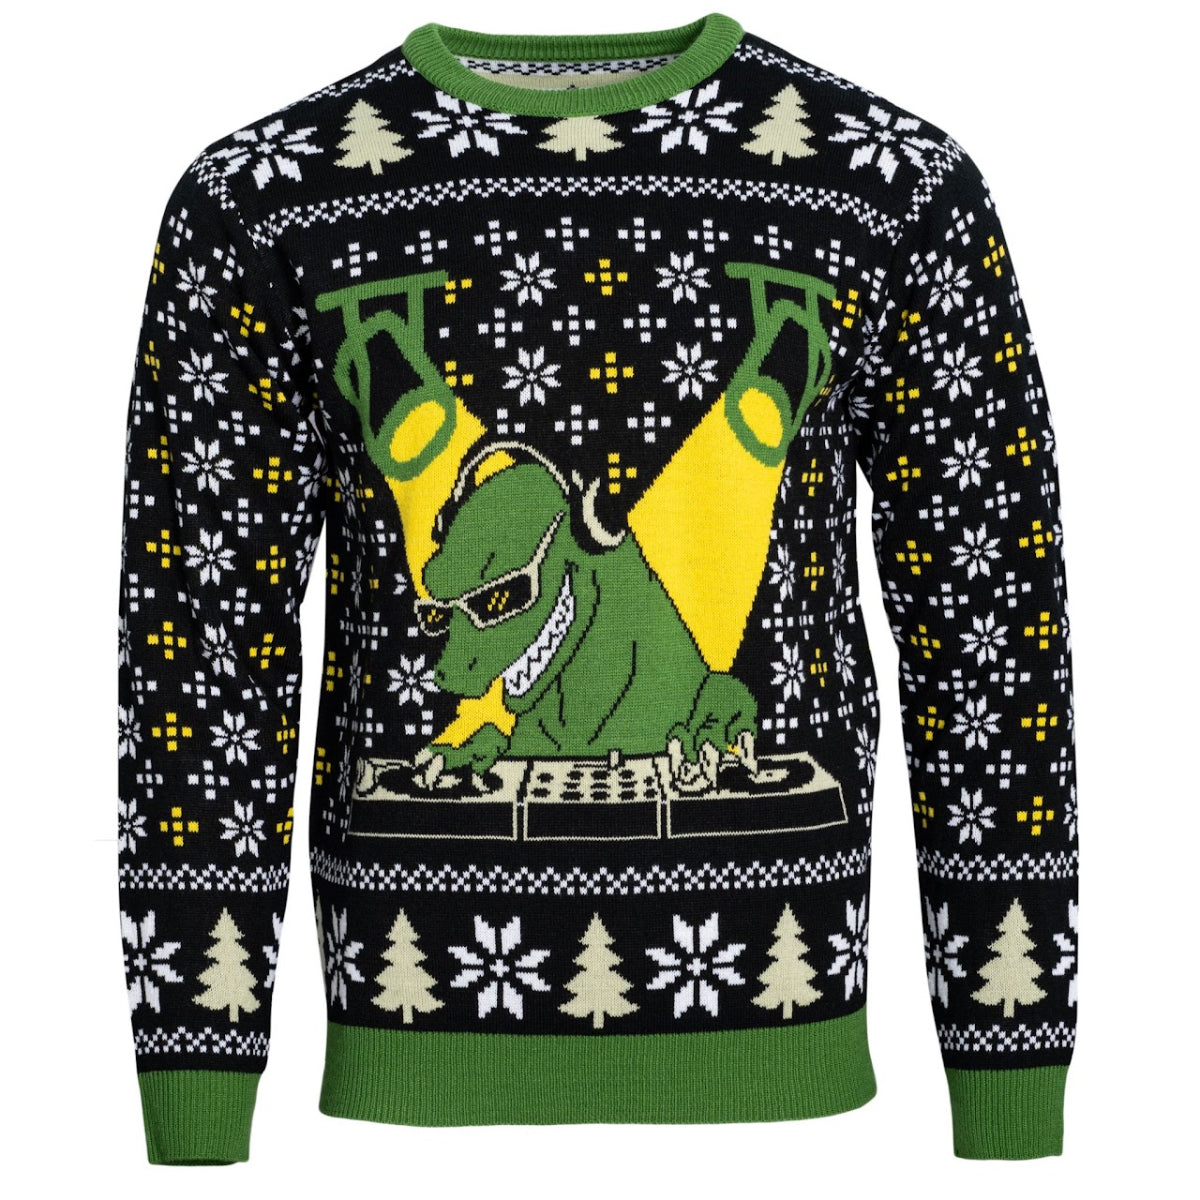 DJ T-Rex Ugly Christmas Sweater